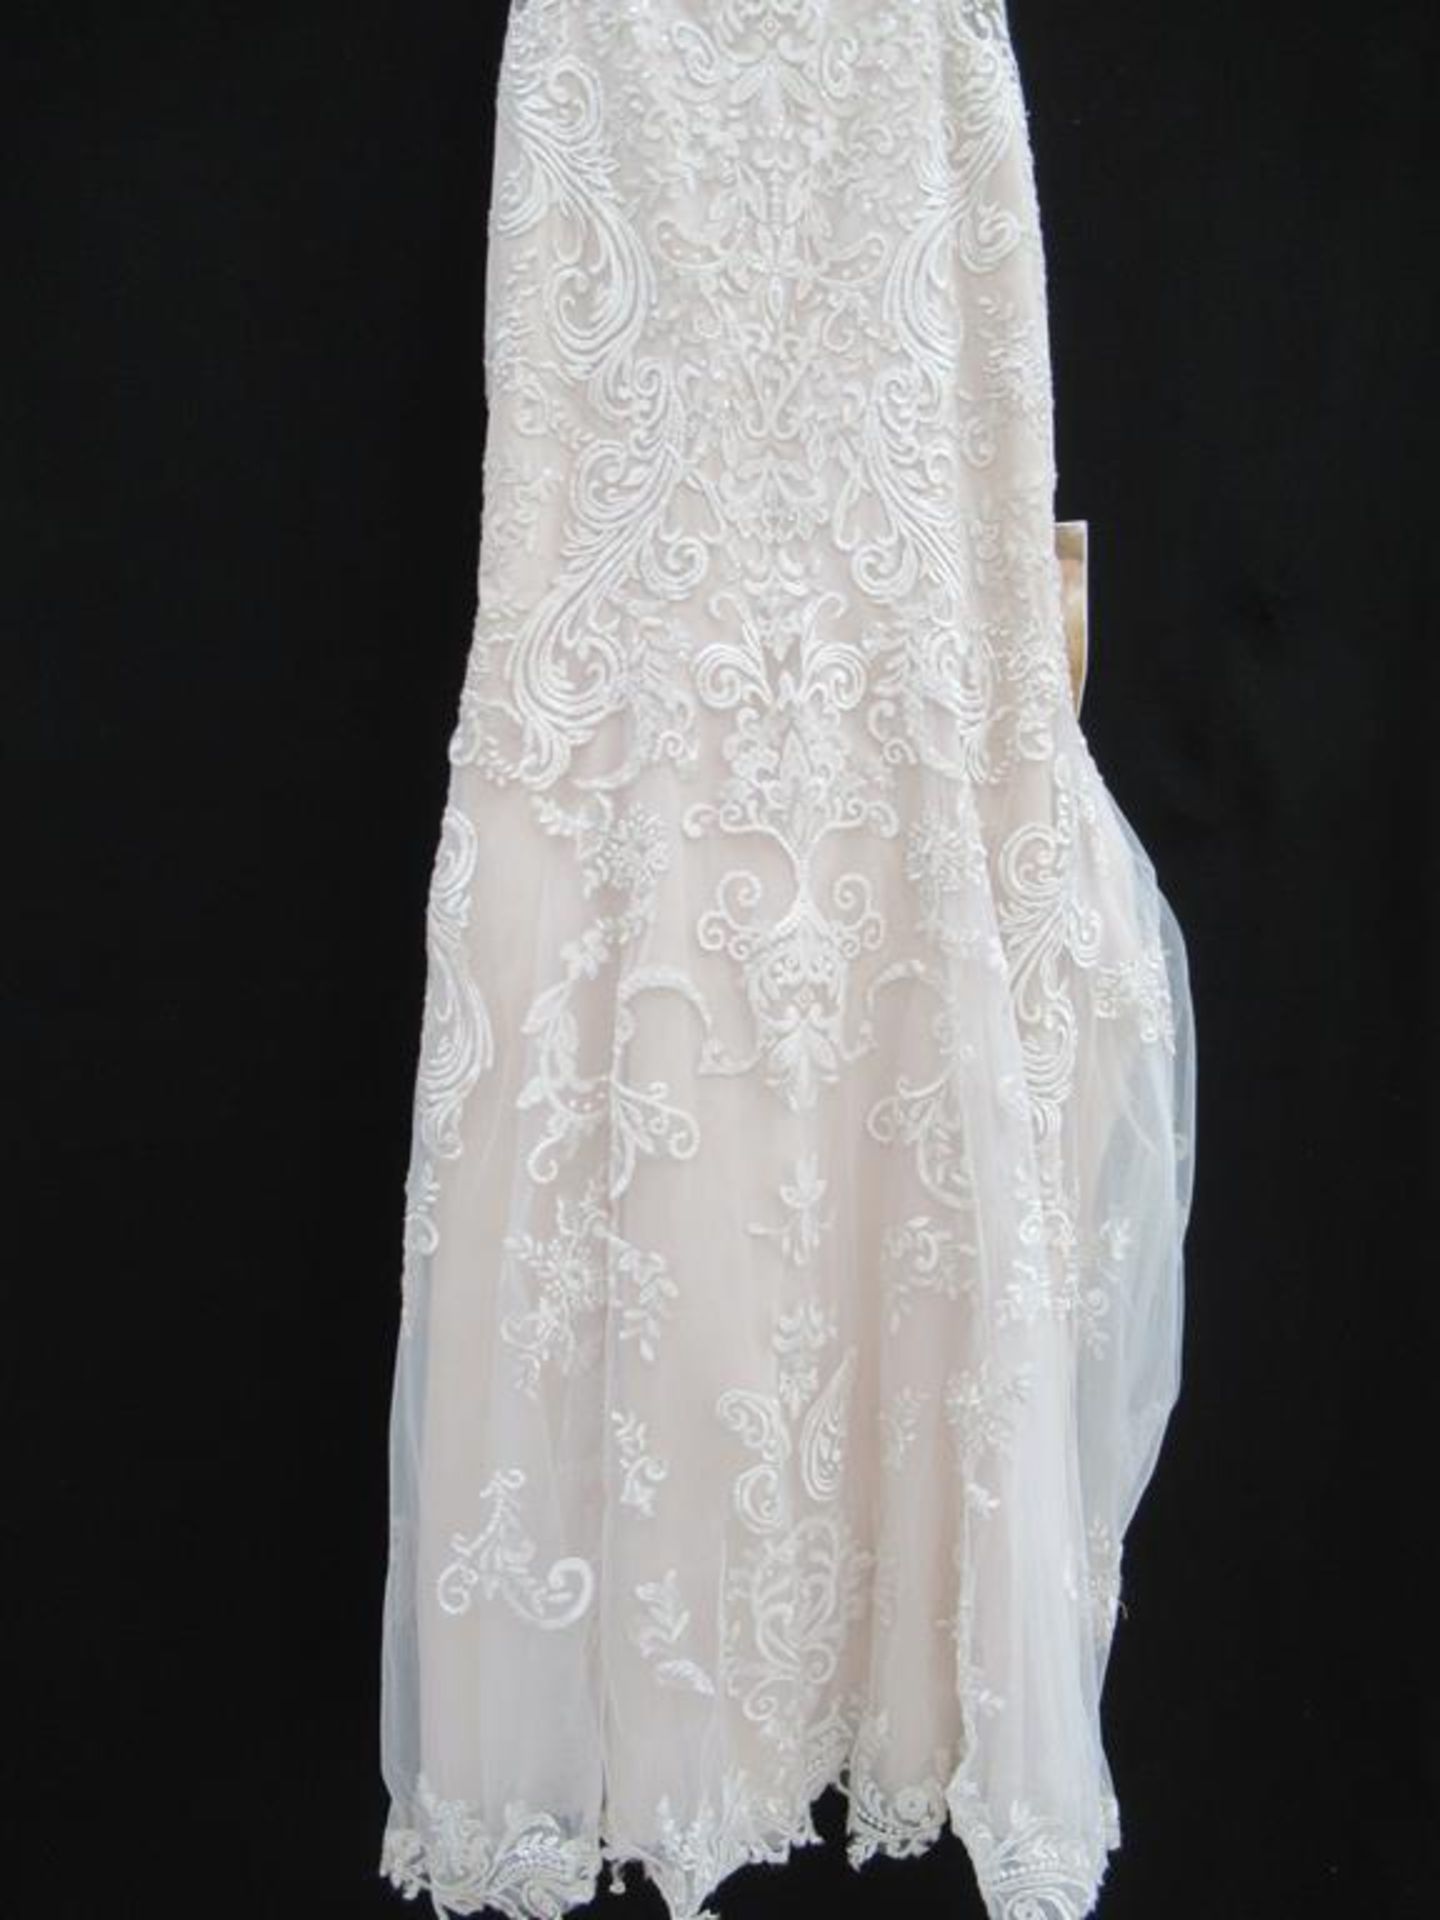 Essense of Australia 'D2322' wedding dress - Image 3 of 3